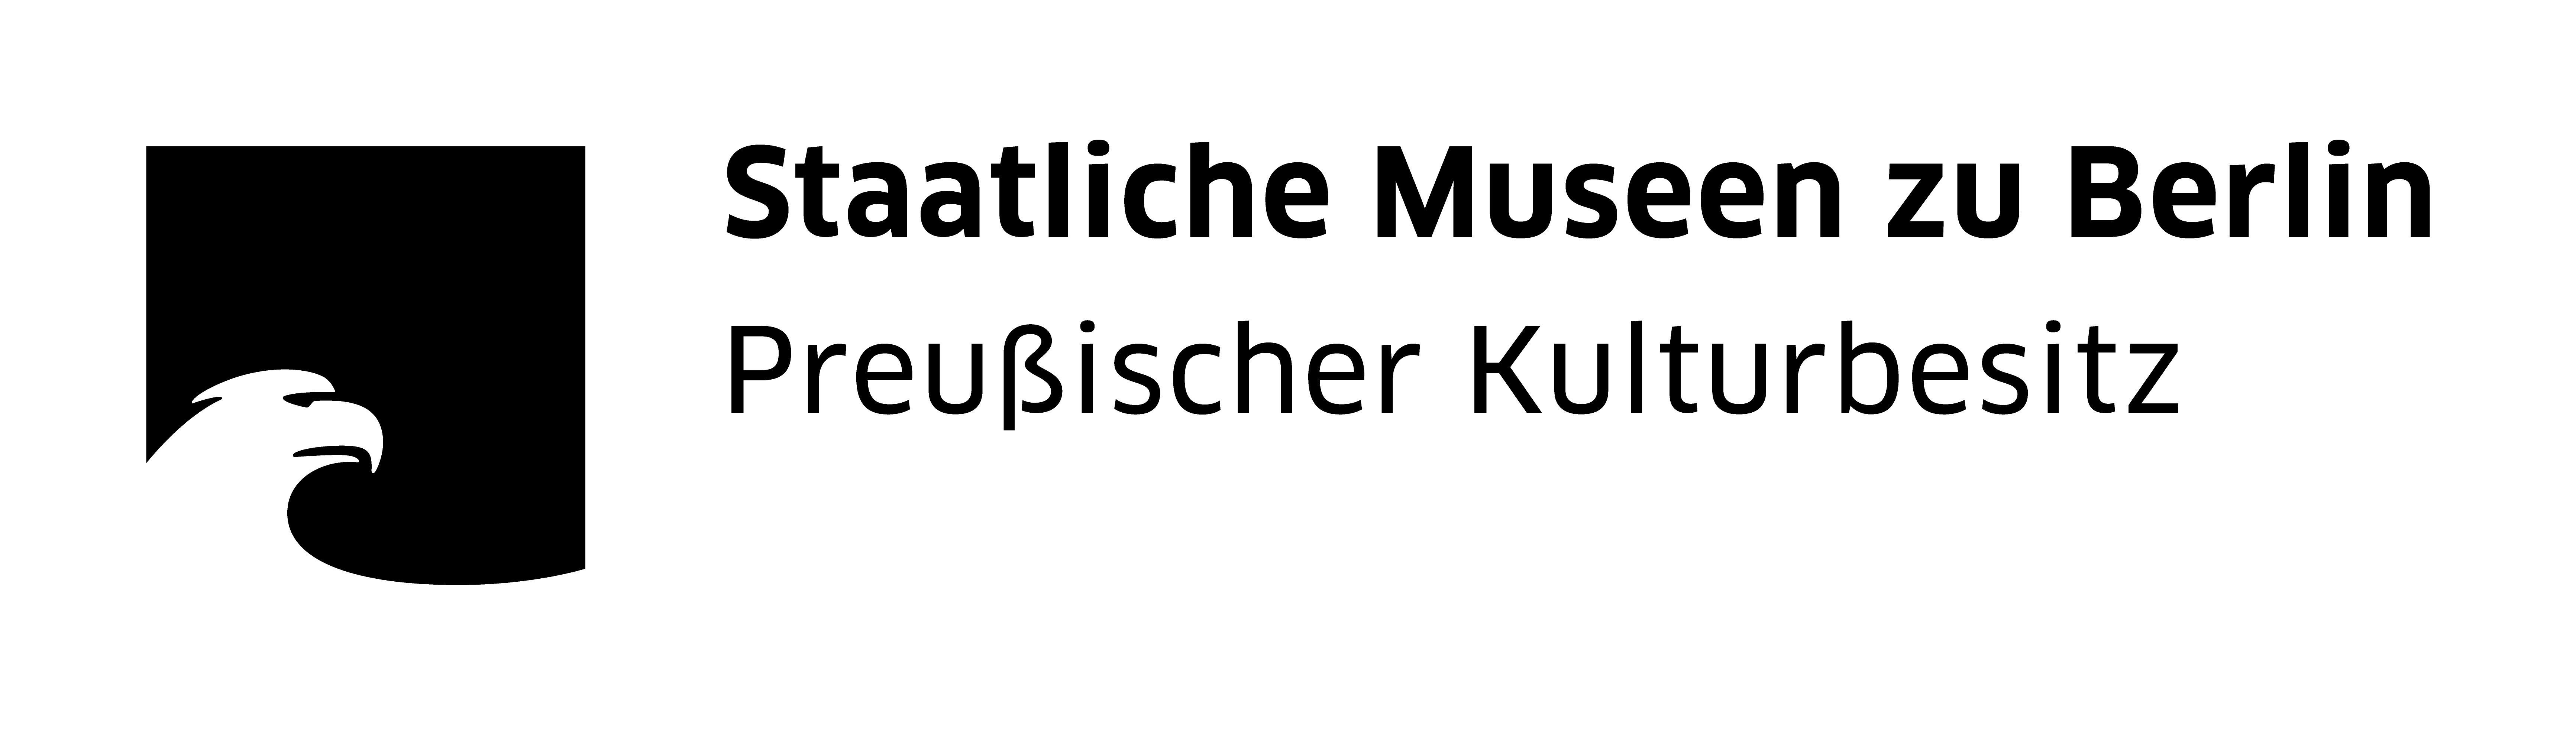 SMB Logo Black sRGB